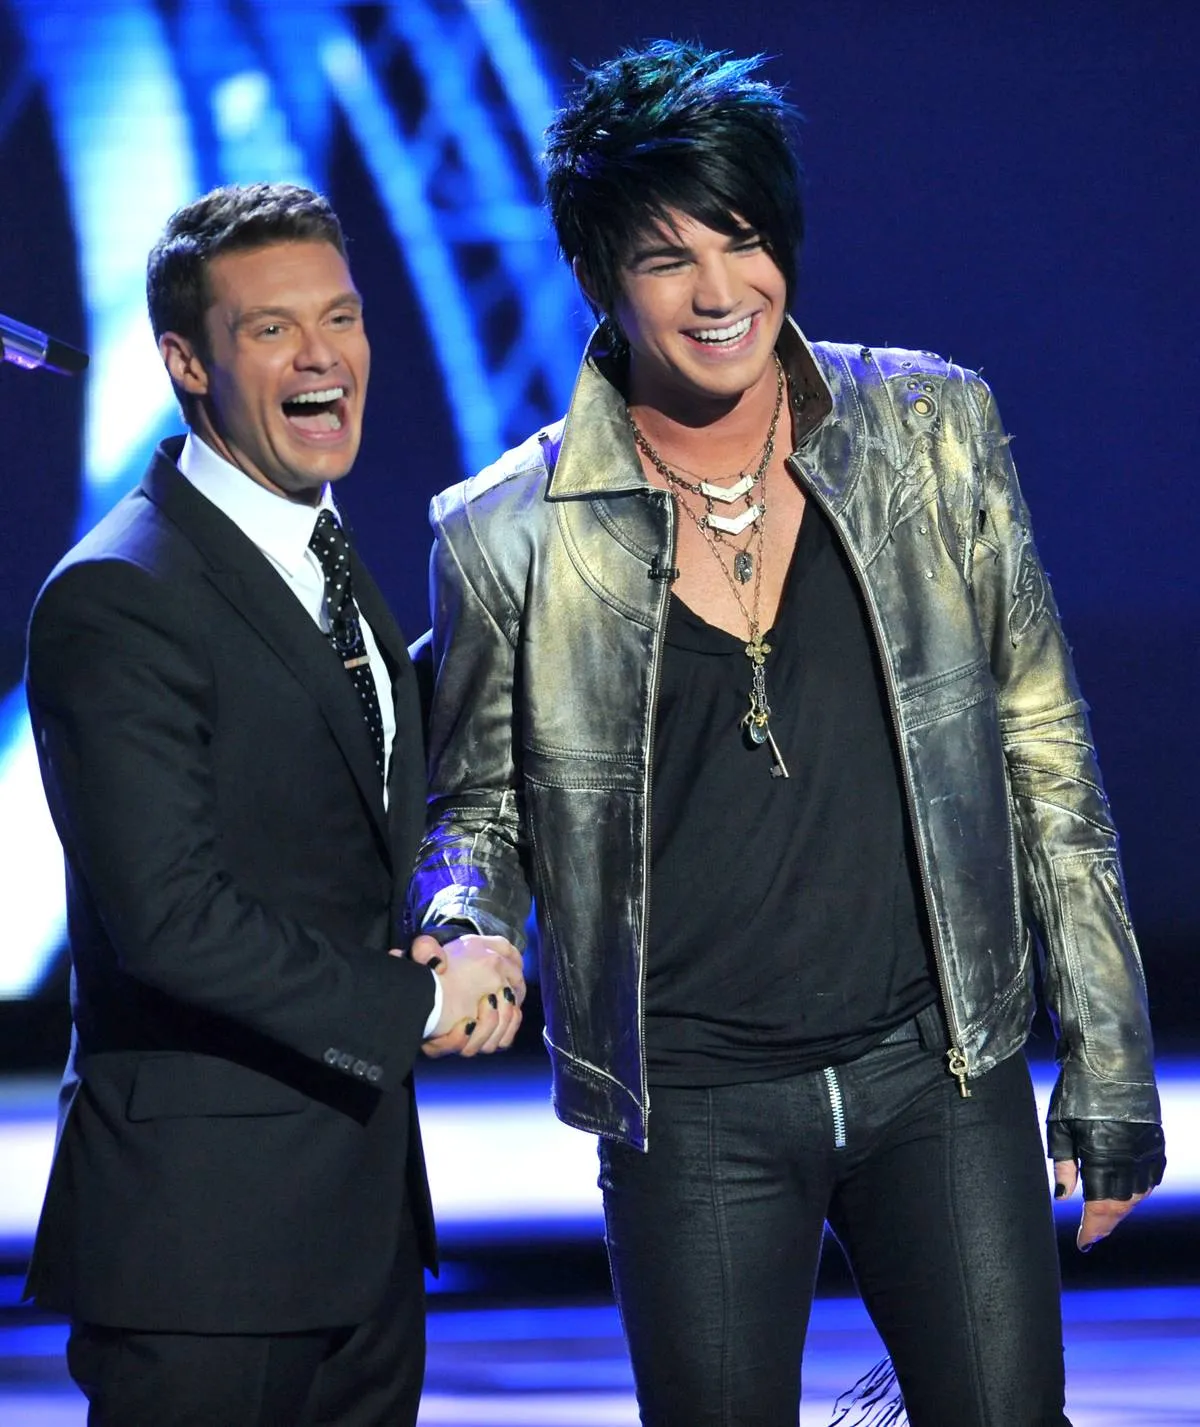 Adam Lambert and Ryan Seacrest shake hands on stage during American Idol Season 8.